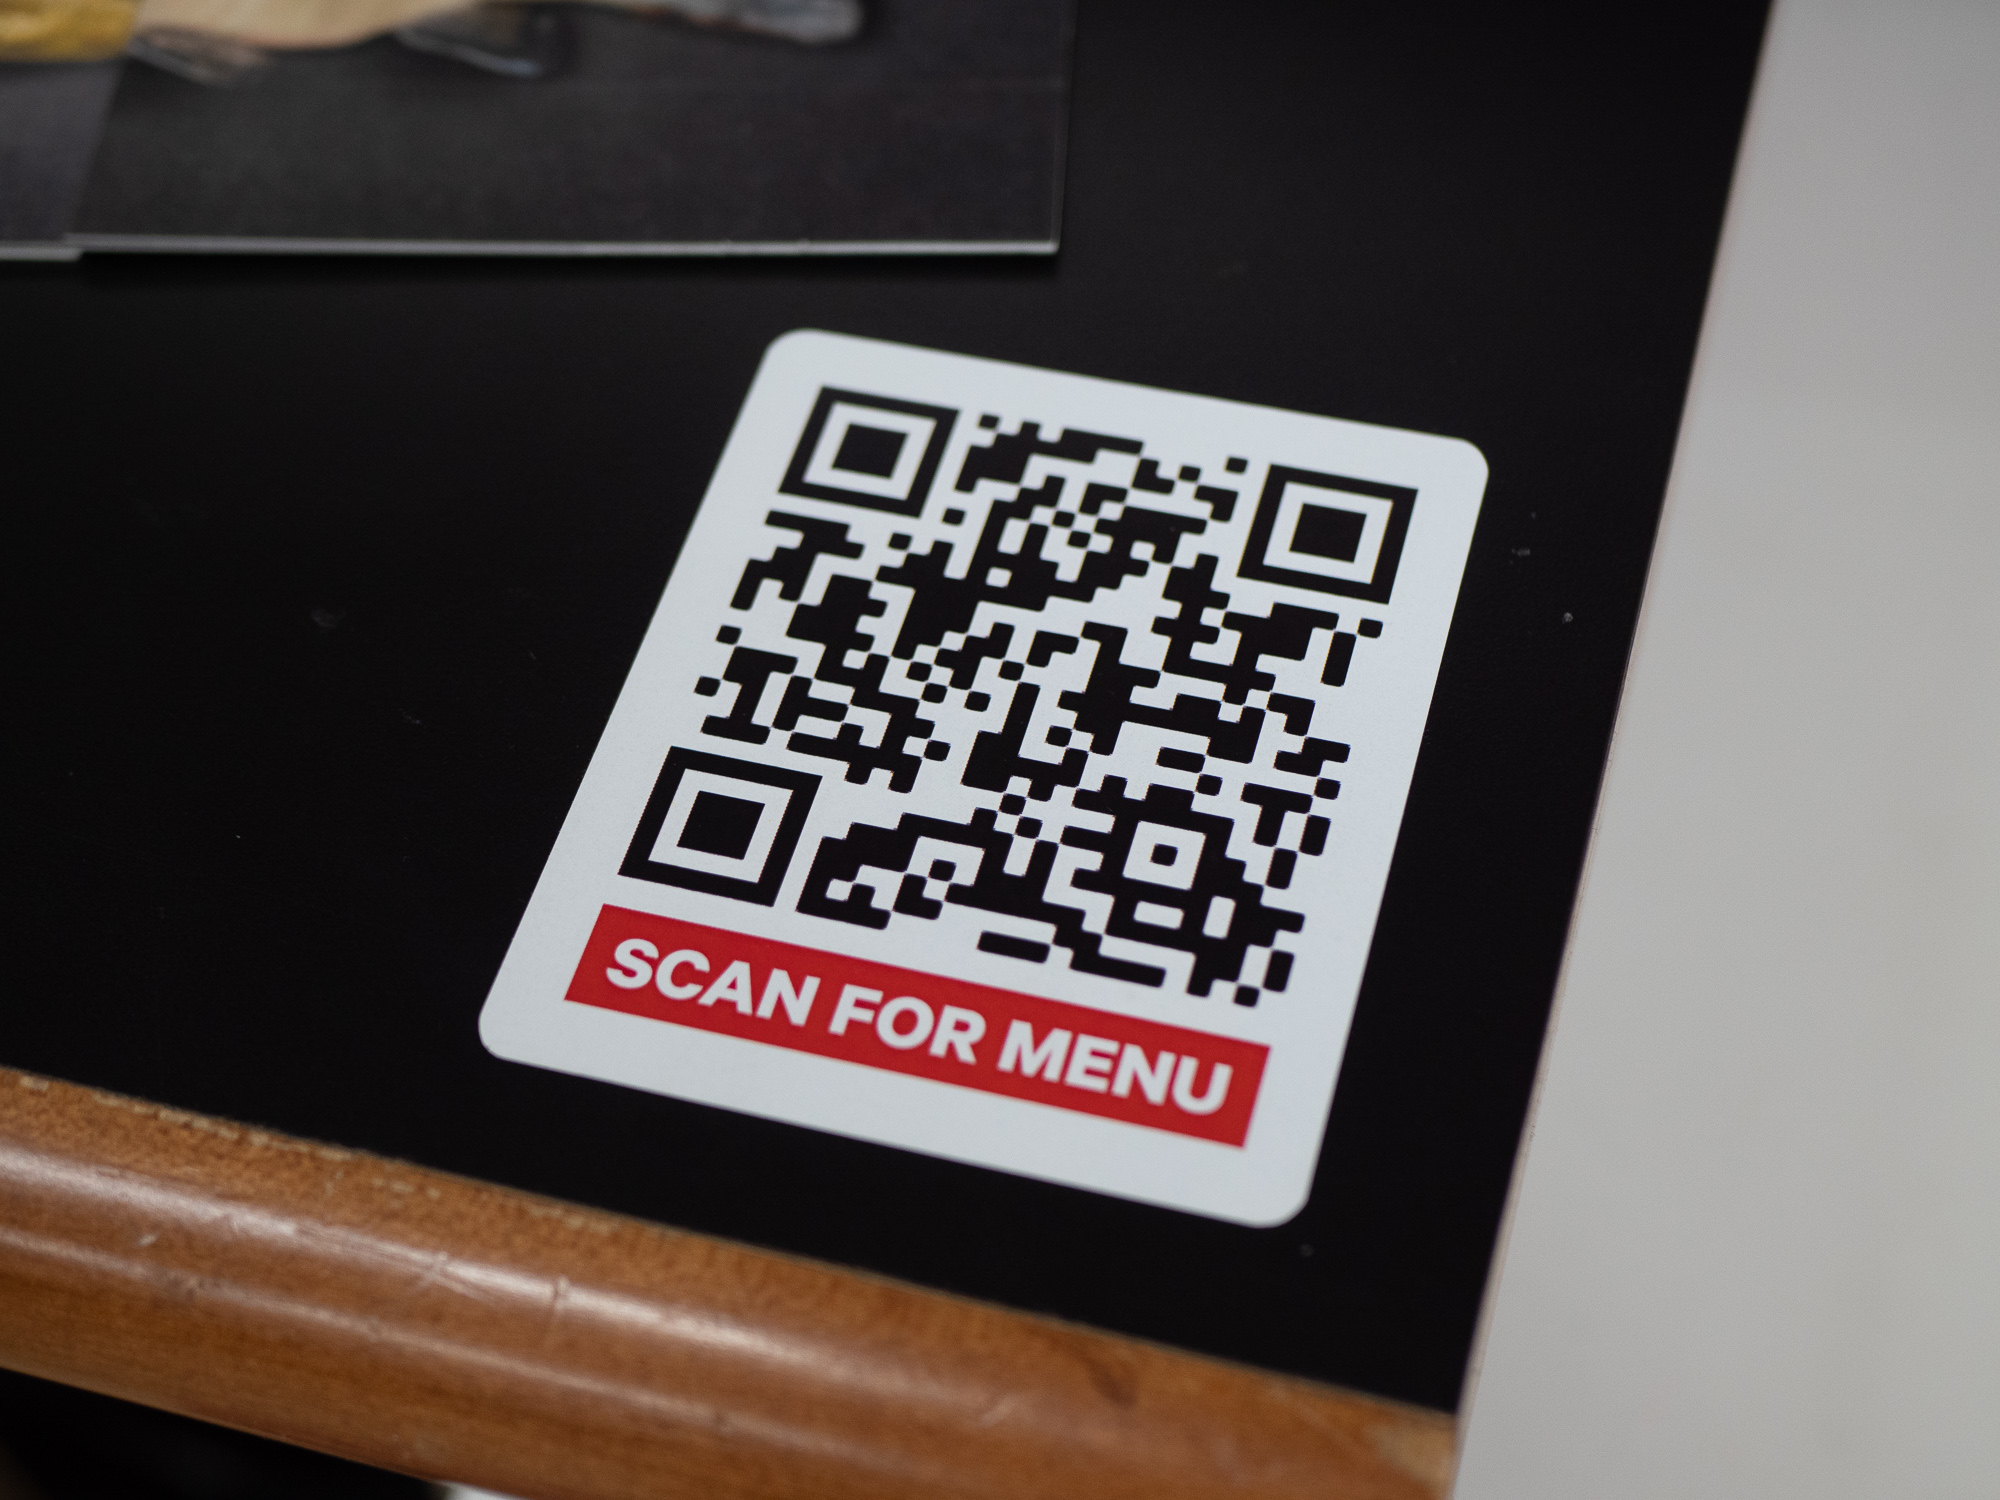 Qr код в залы. Наклейка с QR кодом. Наклейки для QR кодов. QR коды в ресторанах. Наклейка с ЙК кодом на стол.